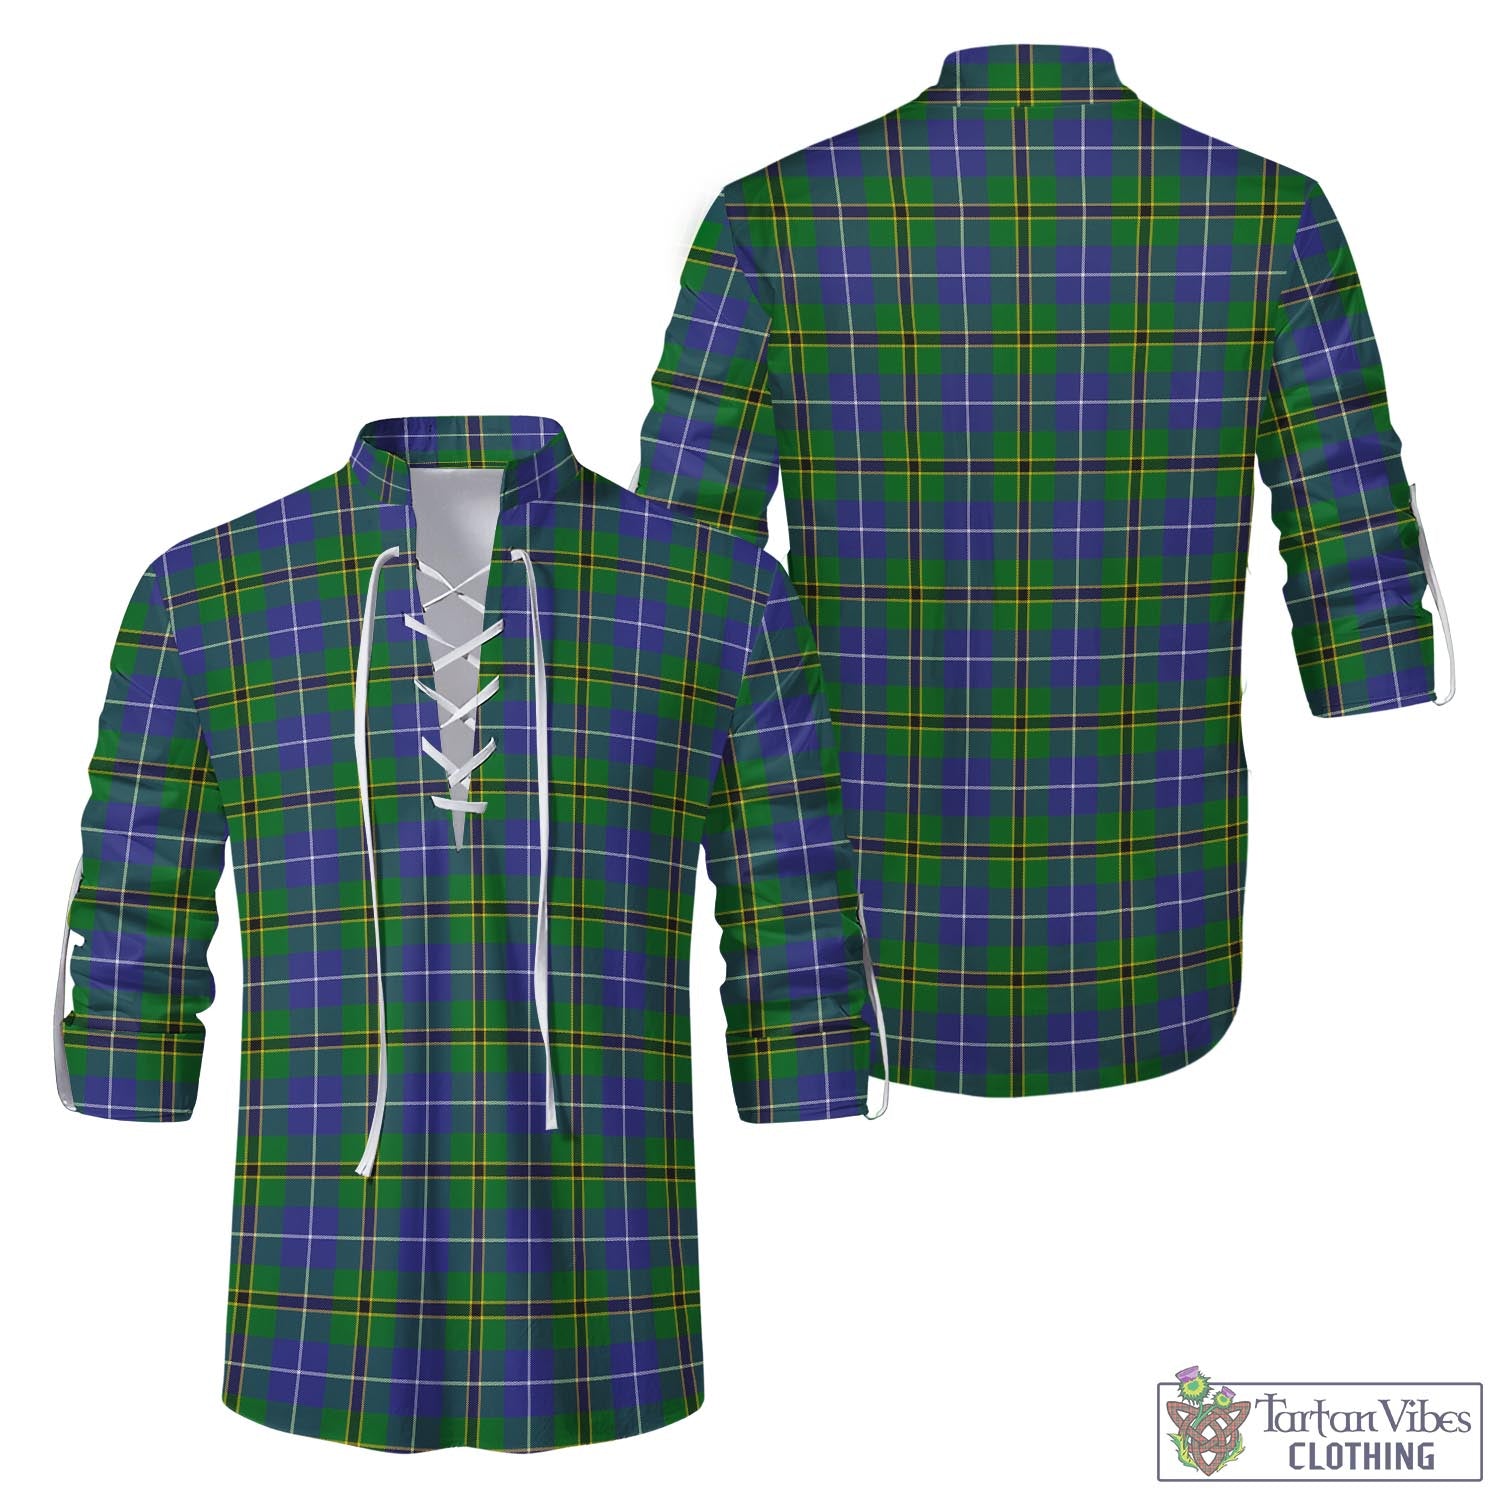 Tartan Vibes Clothing Turnbull Hunting Tartan Men's Scottish Traditional Jacobite Ghillie Kilt Shirt